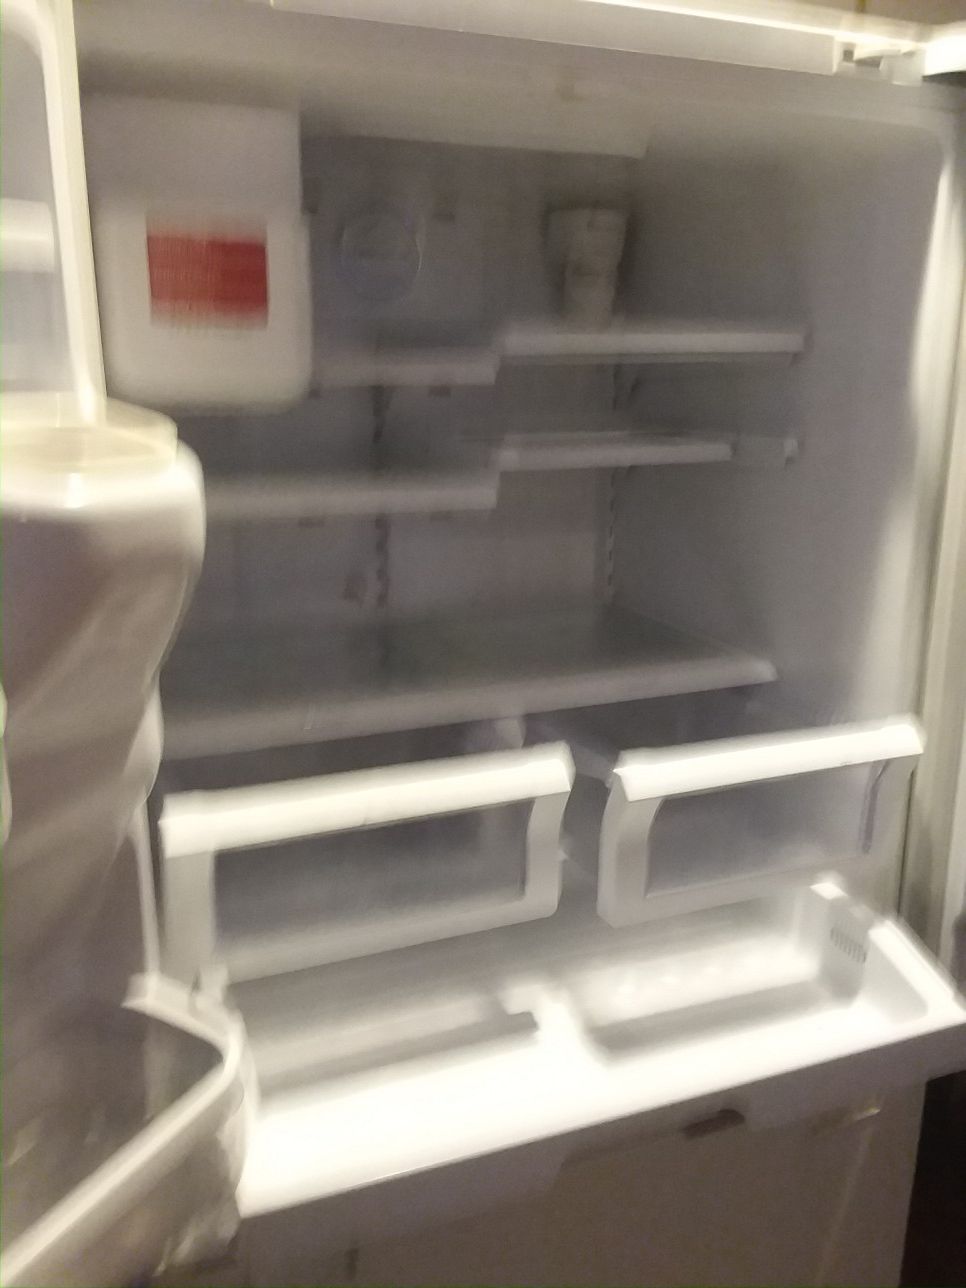 Is the Samsung freezer on bottom fridge on top double doors